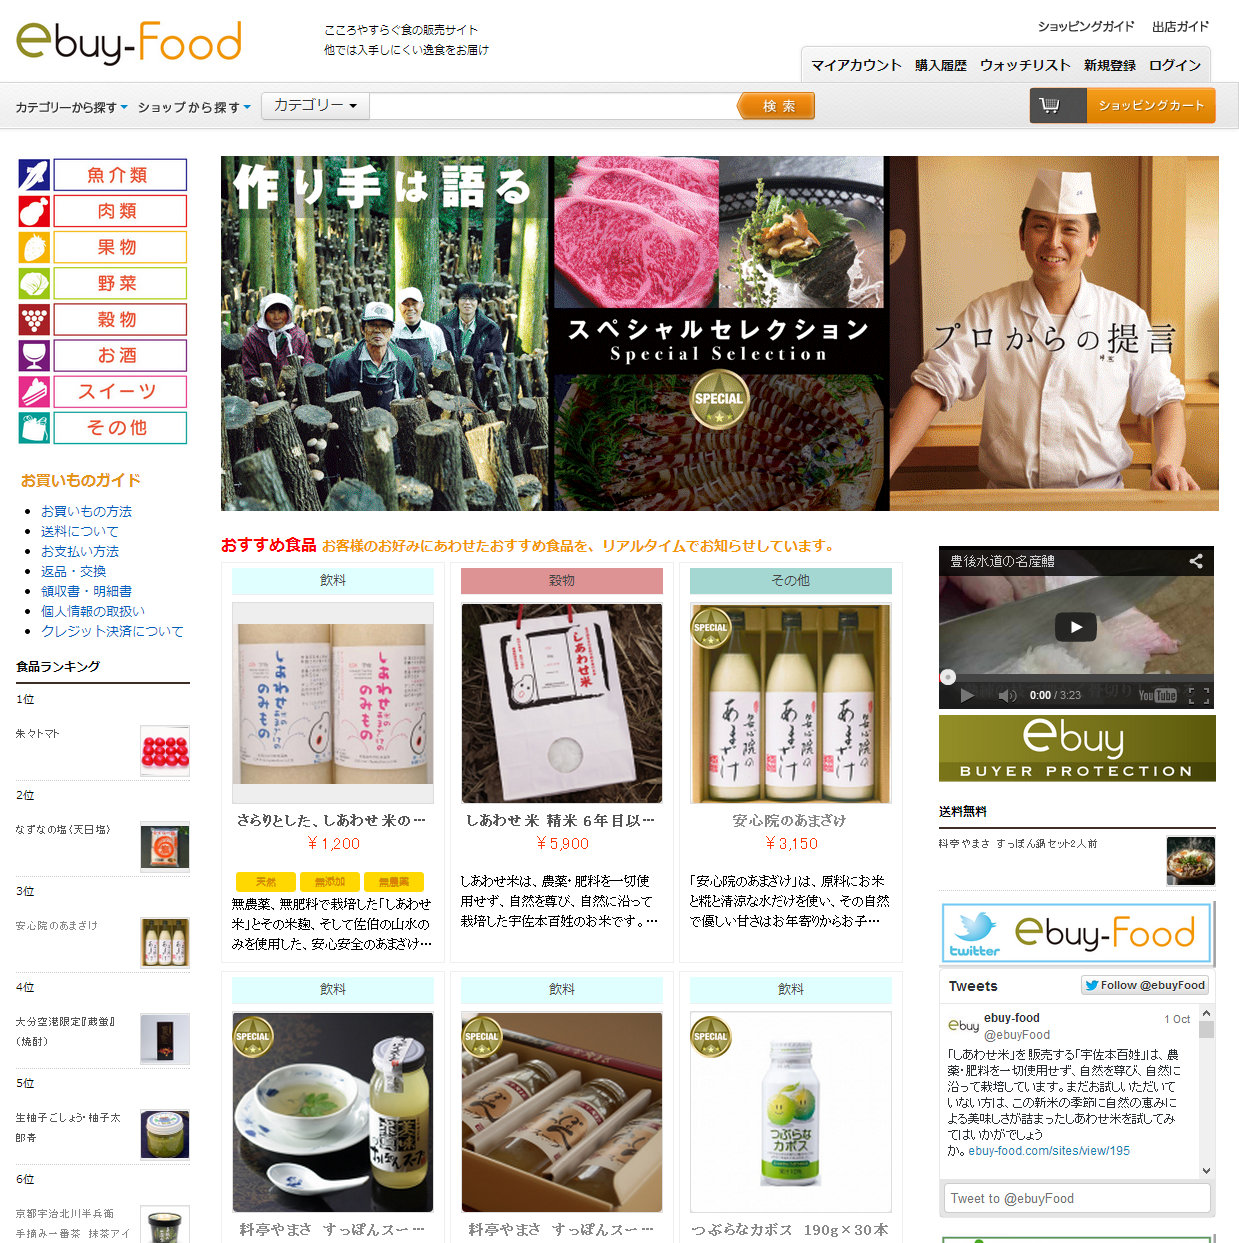 PHP Web system[ebuy-food.com]